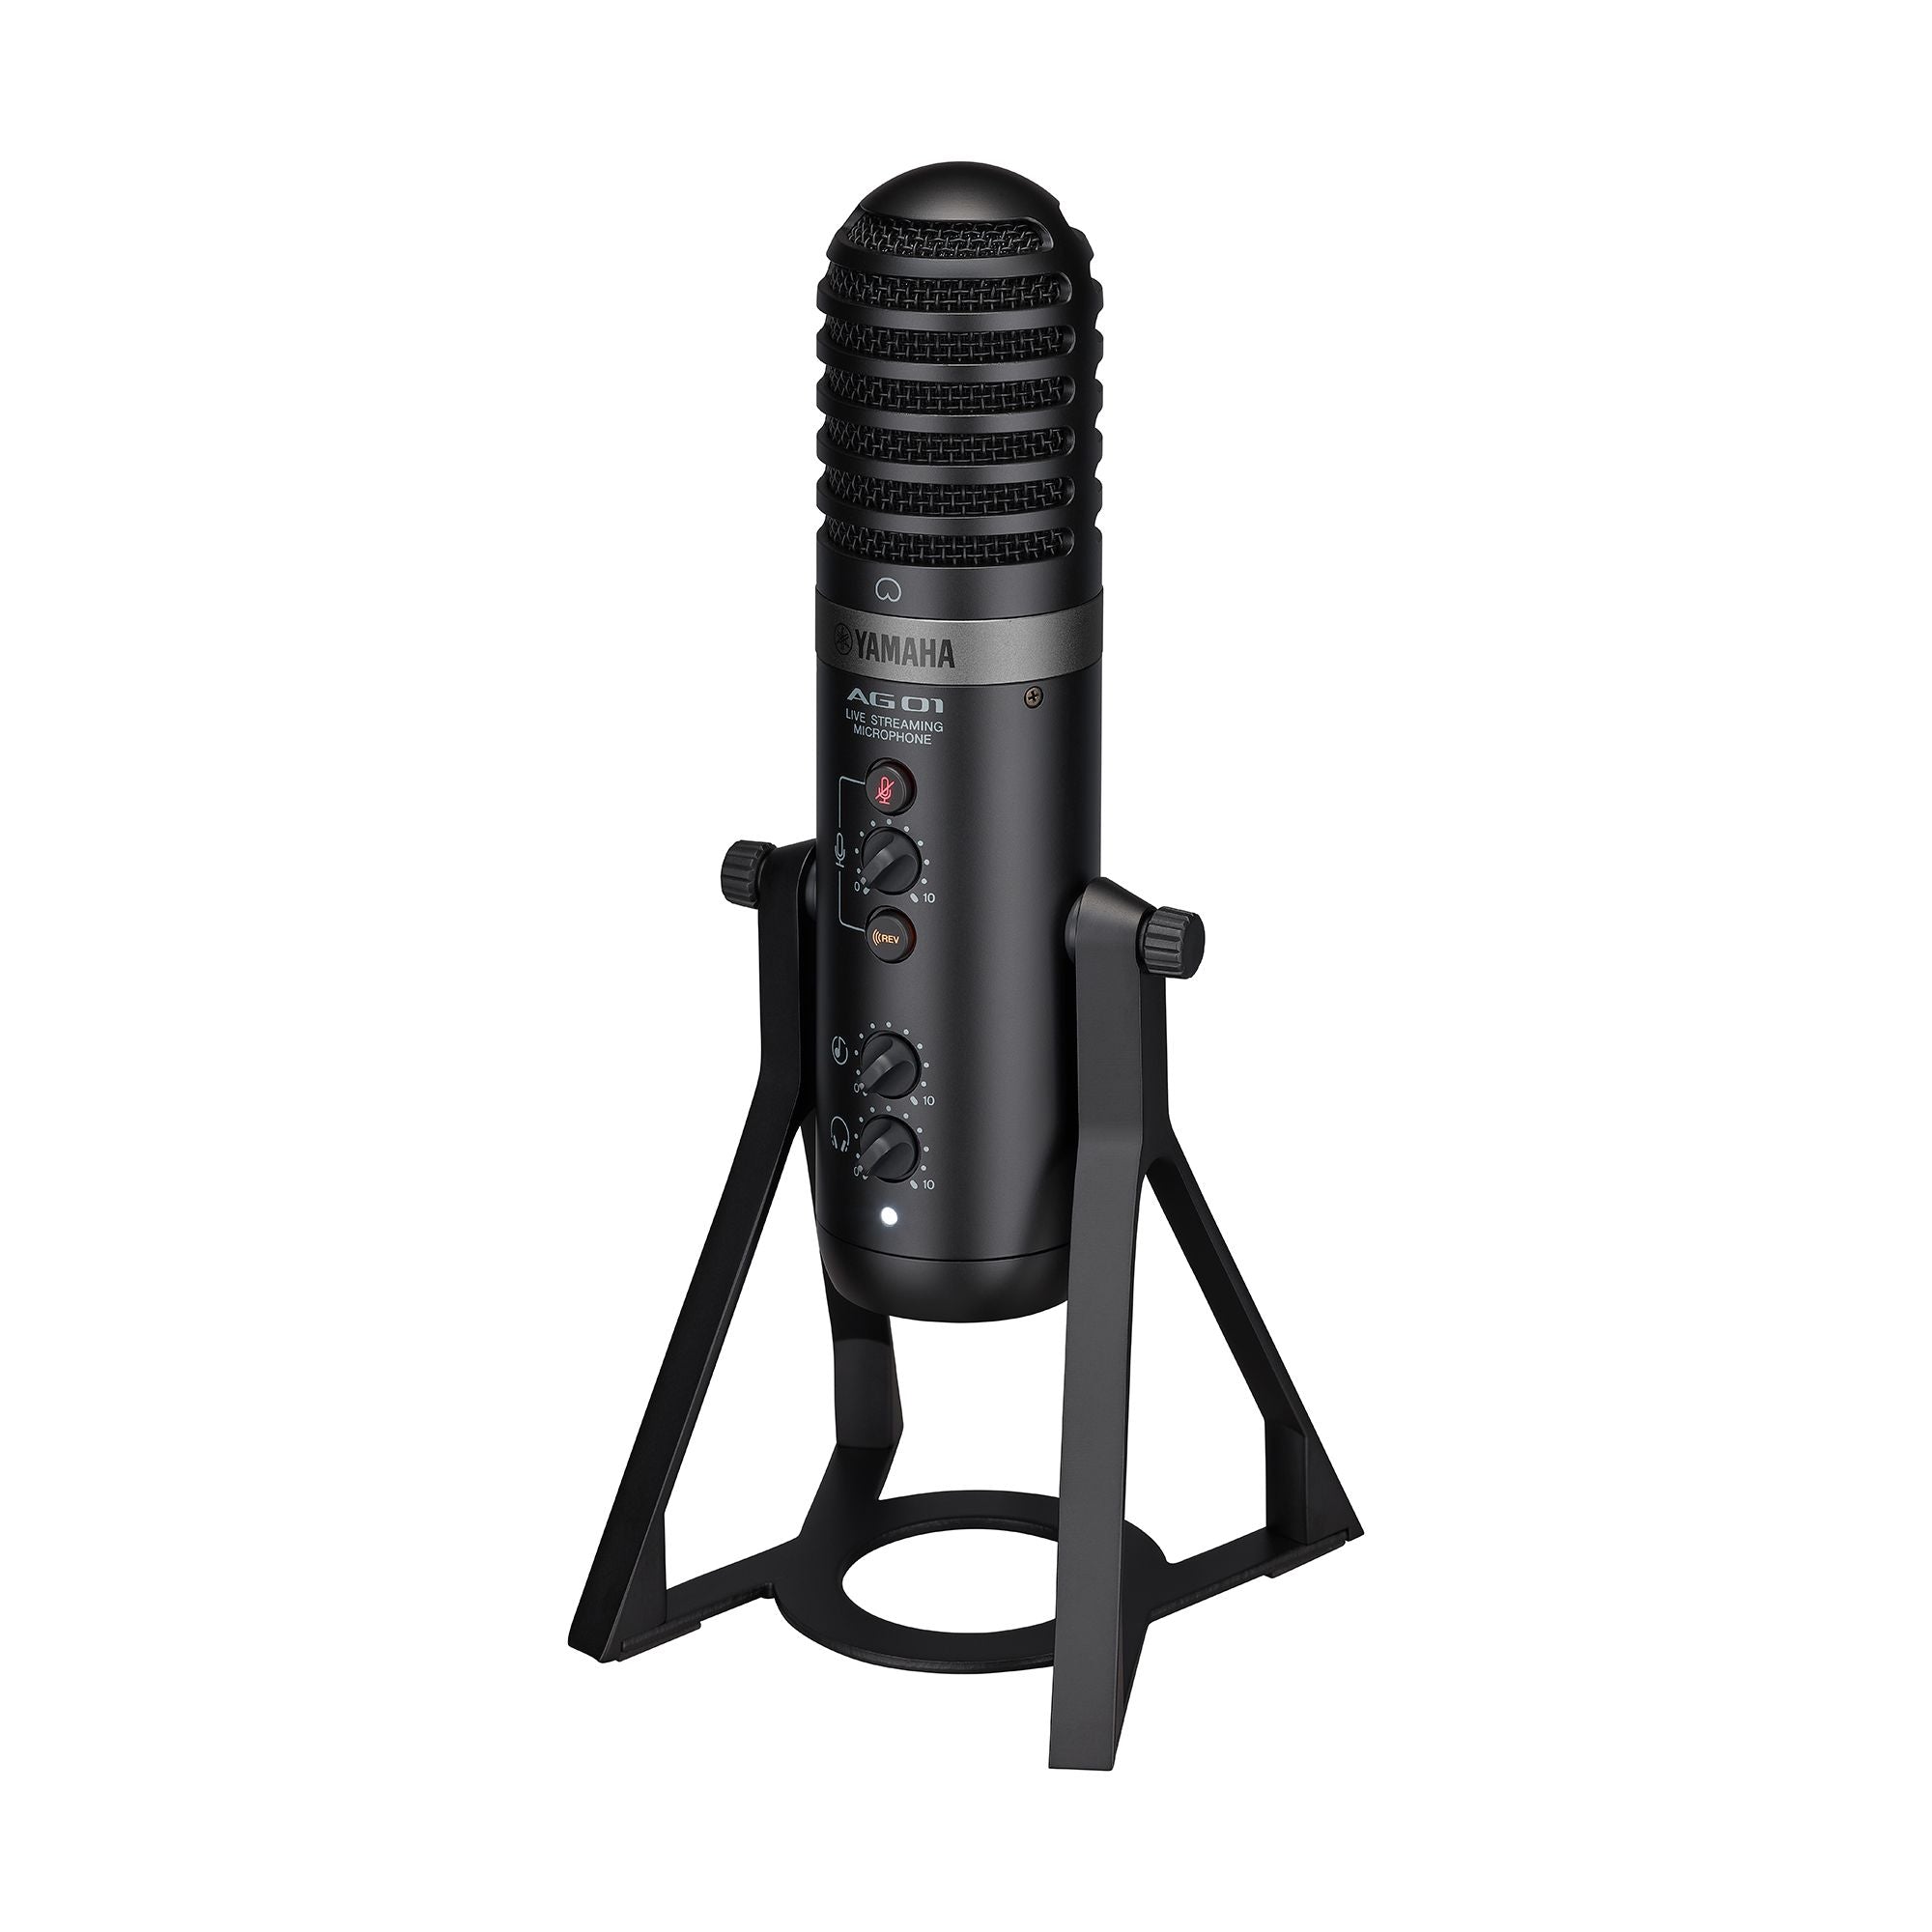 Yamaha AG01 Live Streaming USB Microphone, Black